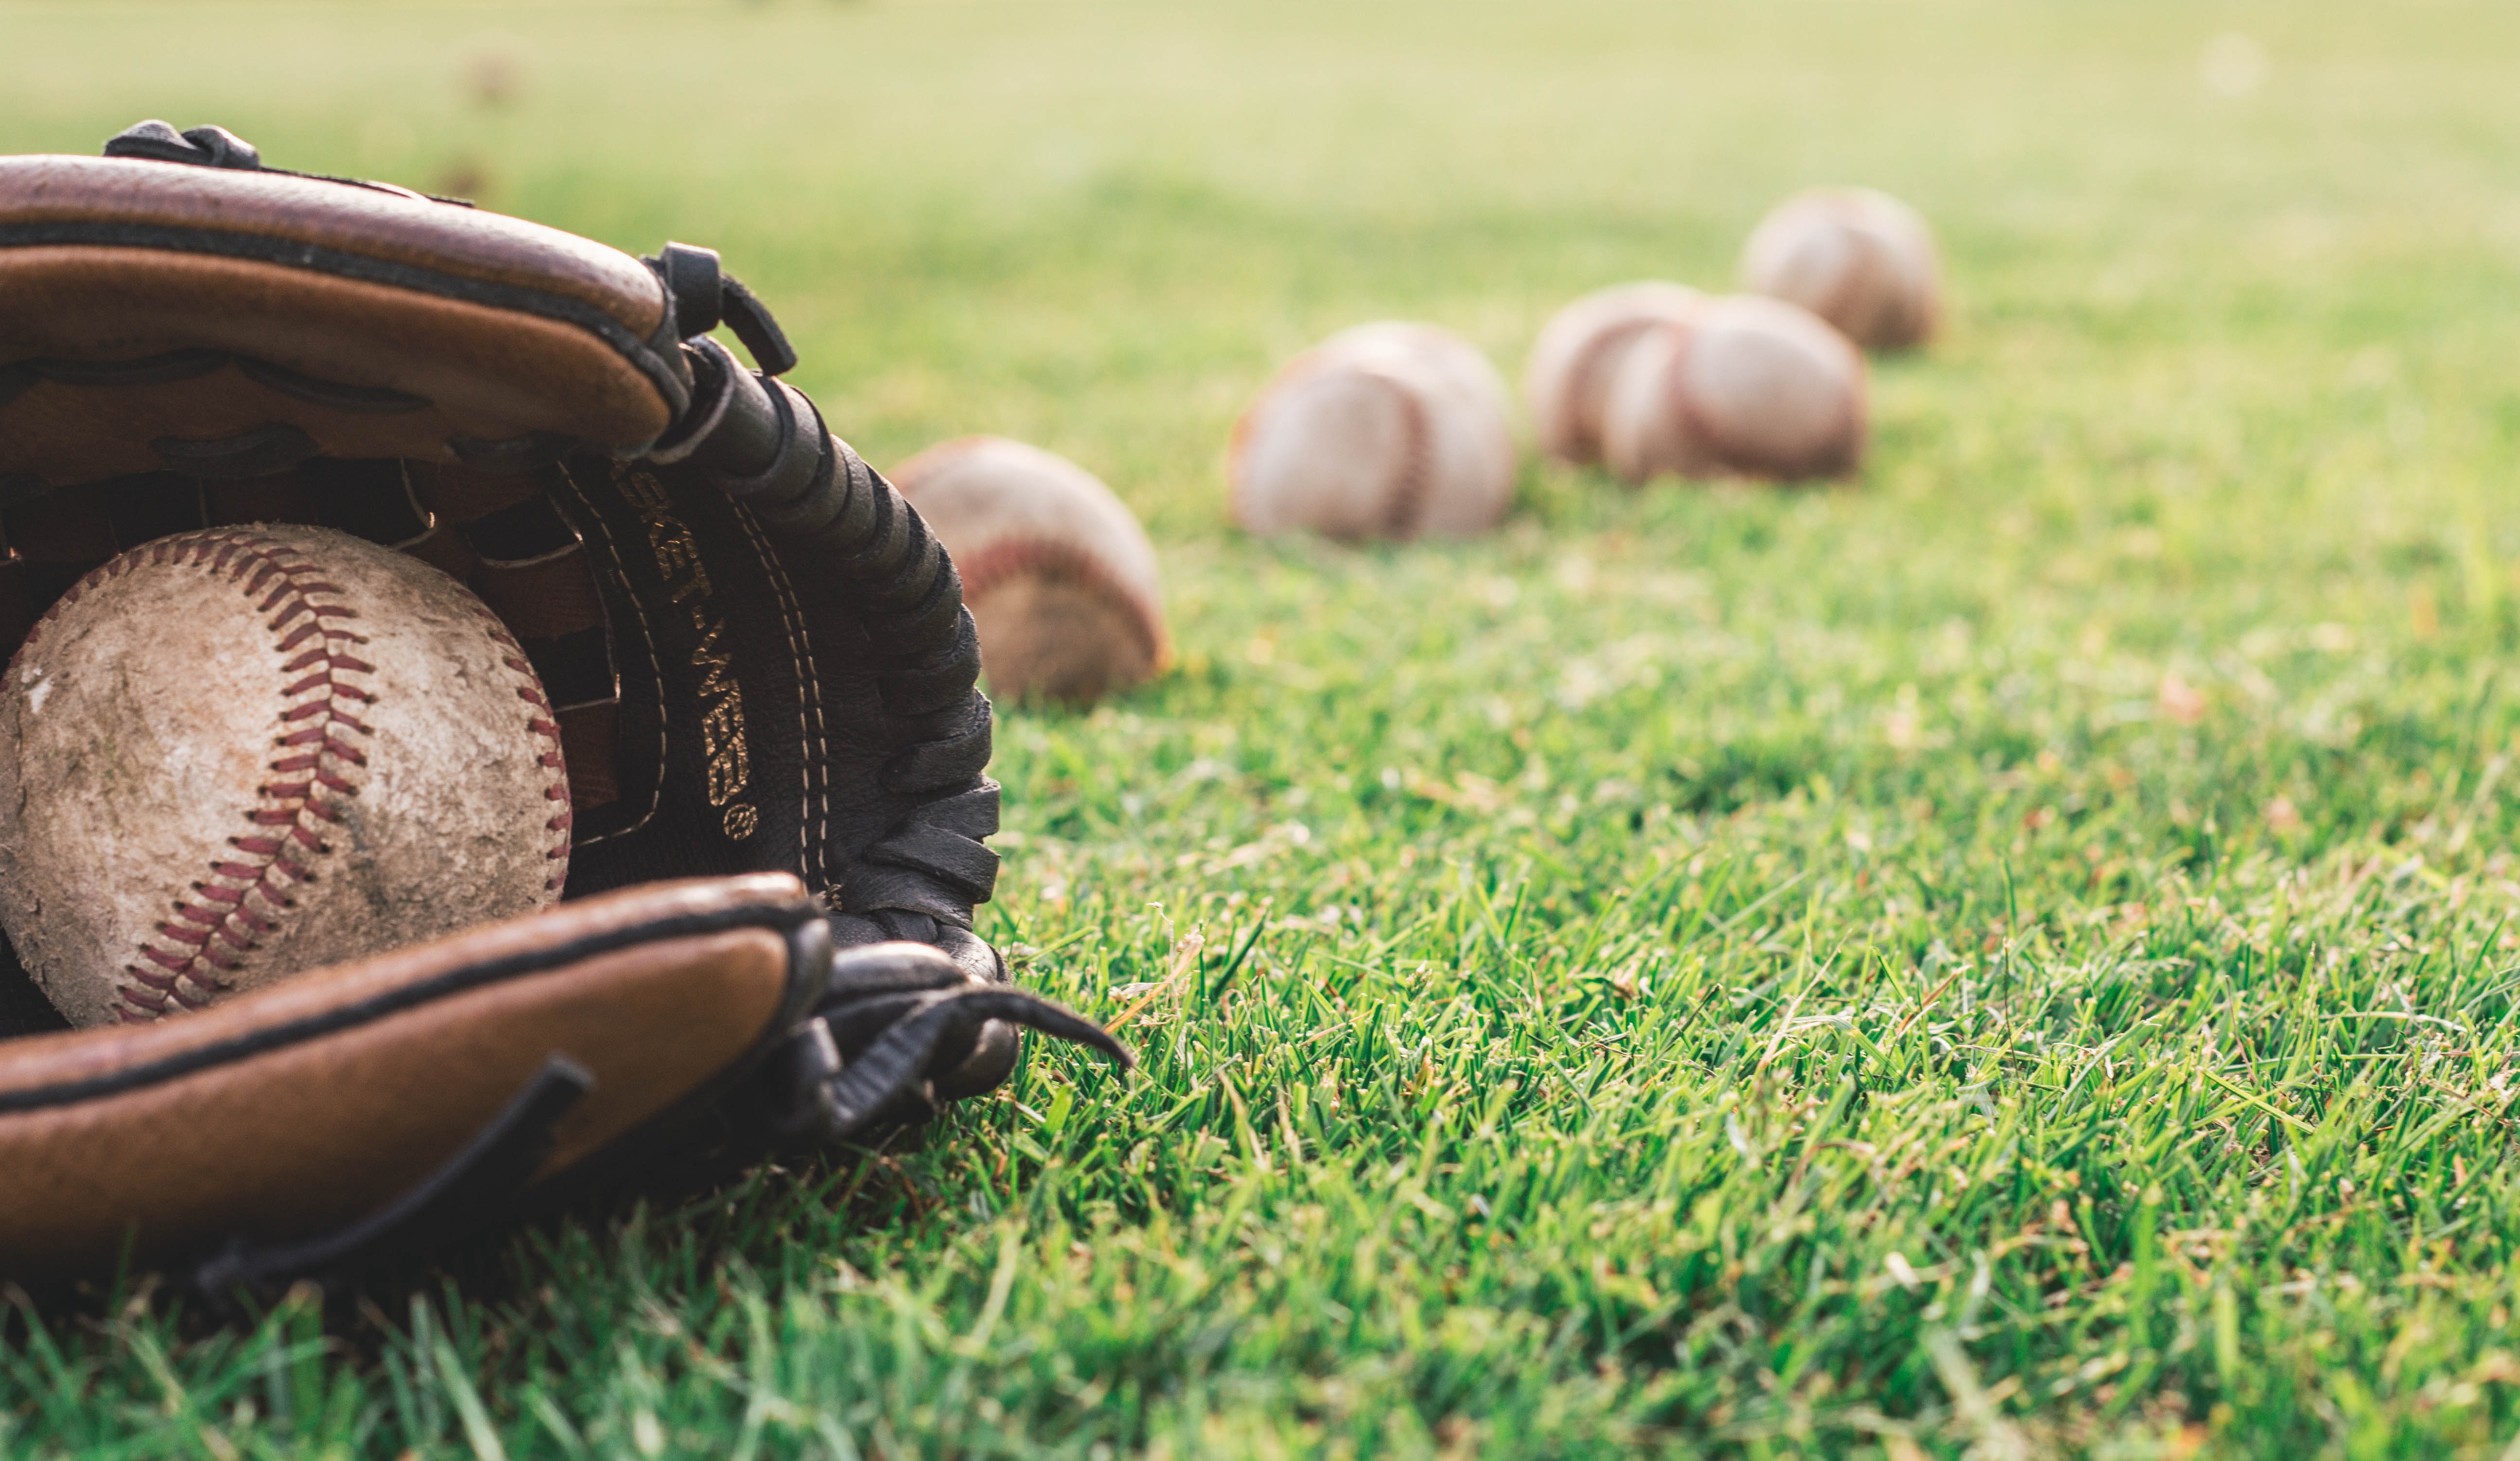 A baseball glove with several baseballs lying on green grass.